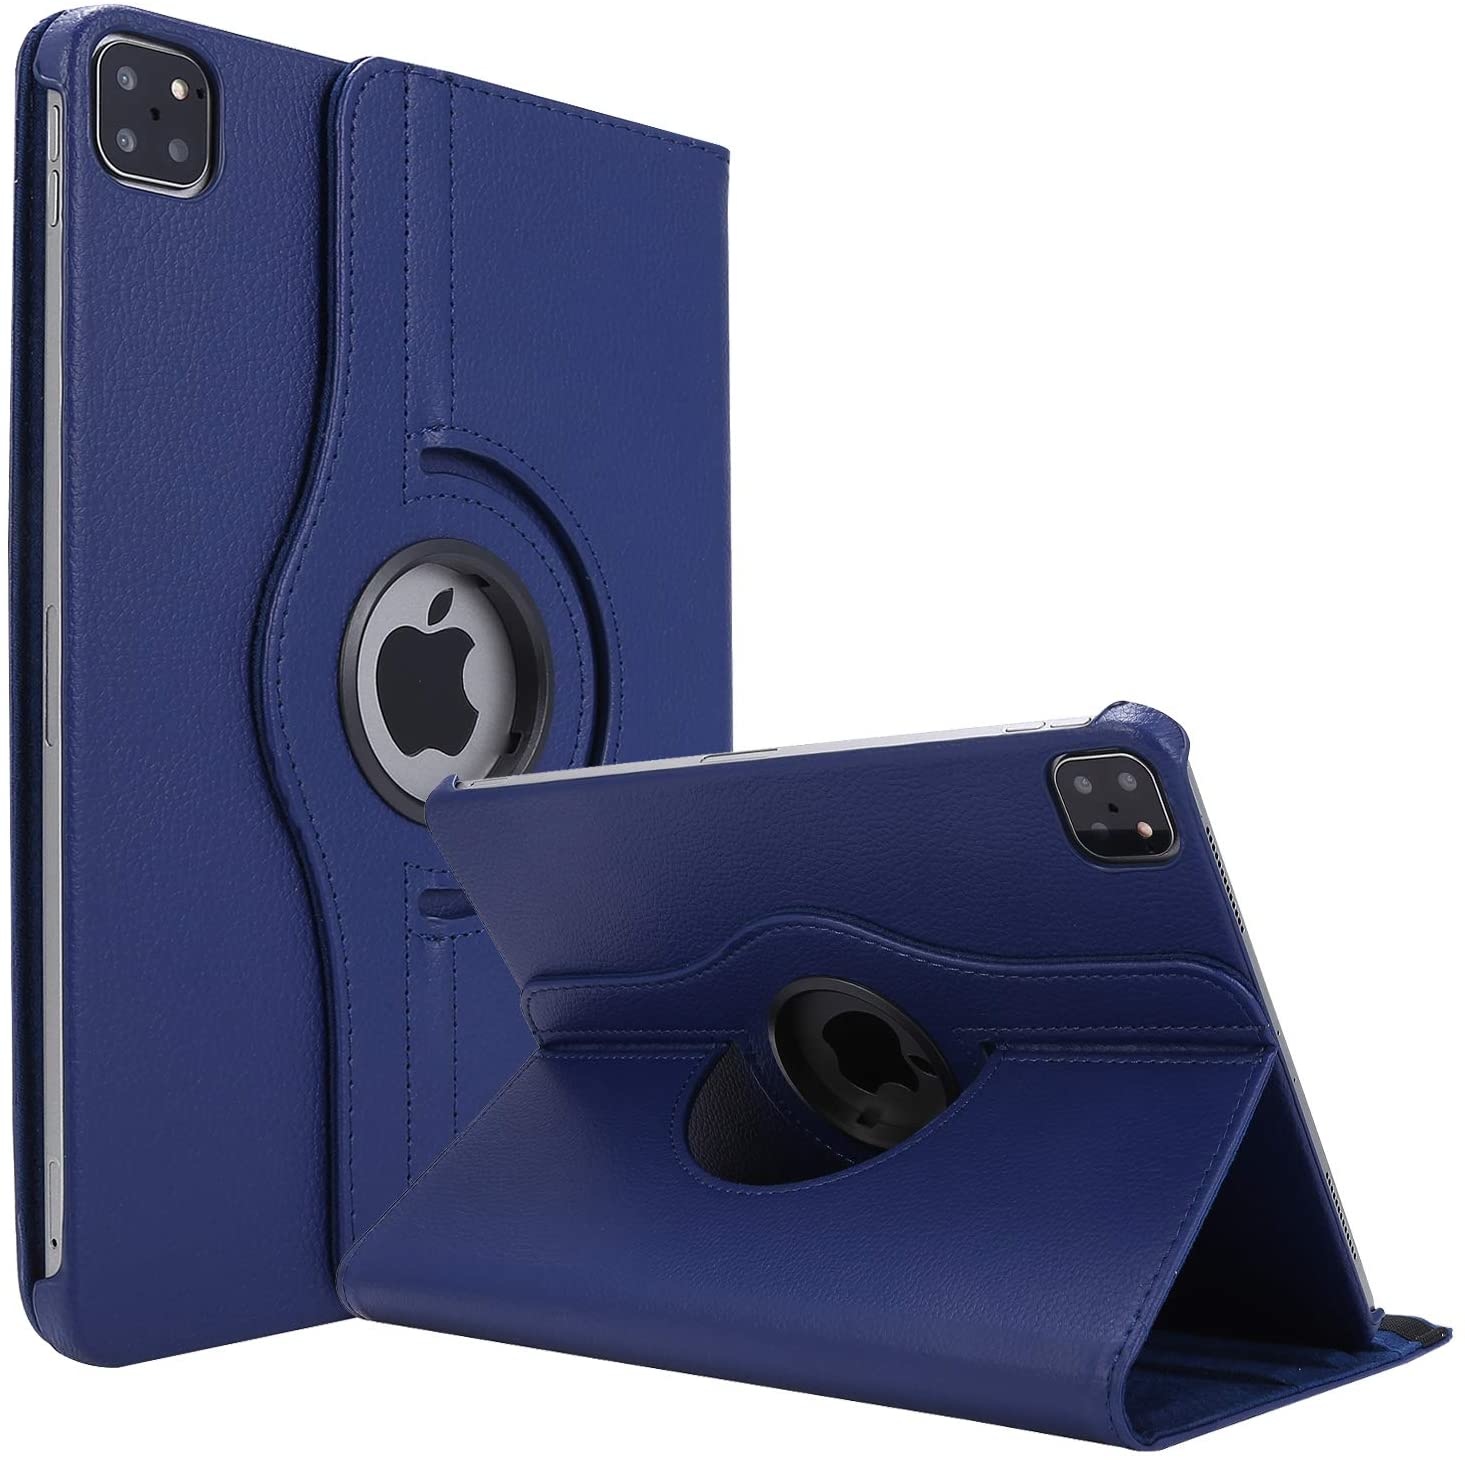 aanval Kenia piek iPad Air 2020 10.9-inch 360 graden hoes blauw - Gratis verzending -  iPadspullekes